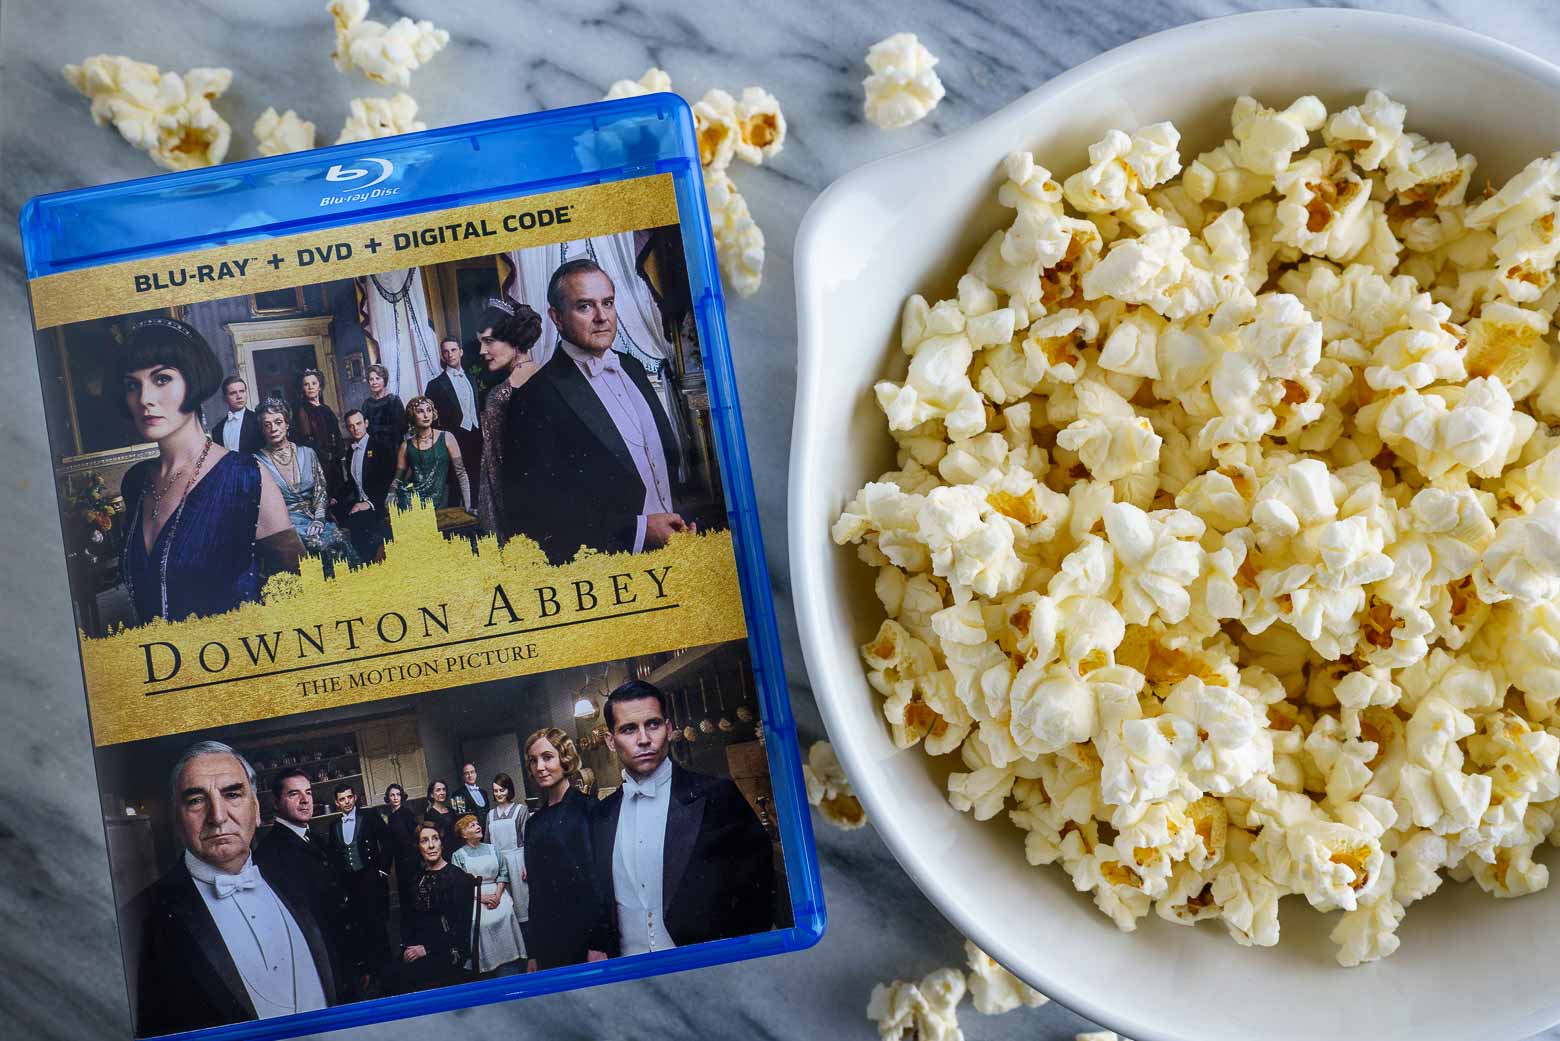 Downton Abbey Film DVD next to a bowl of popcorn